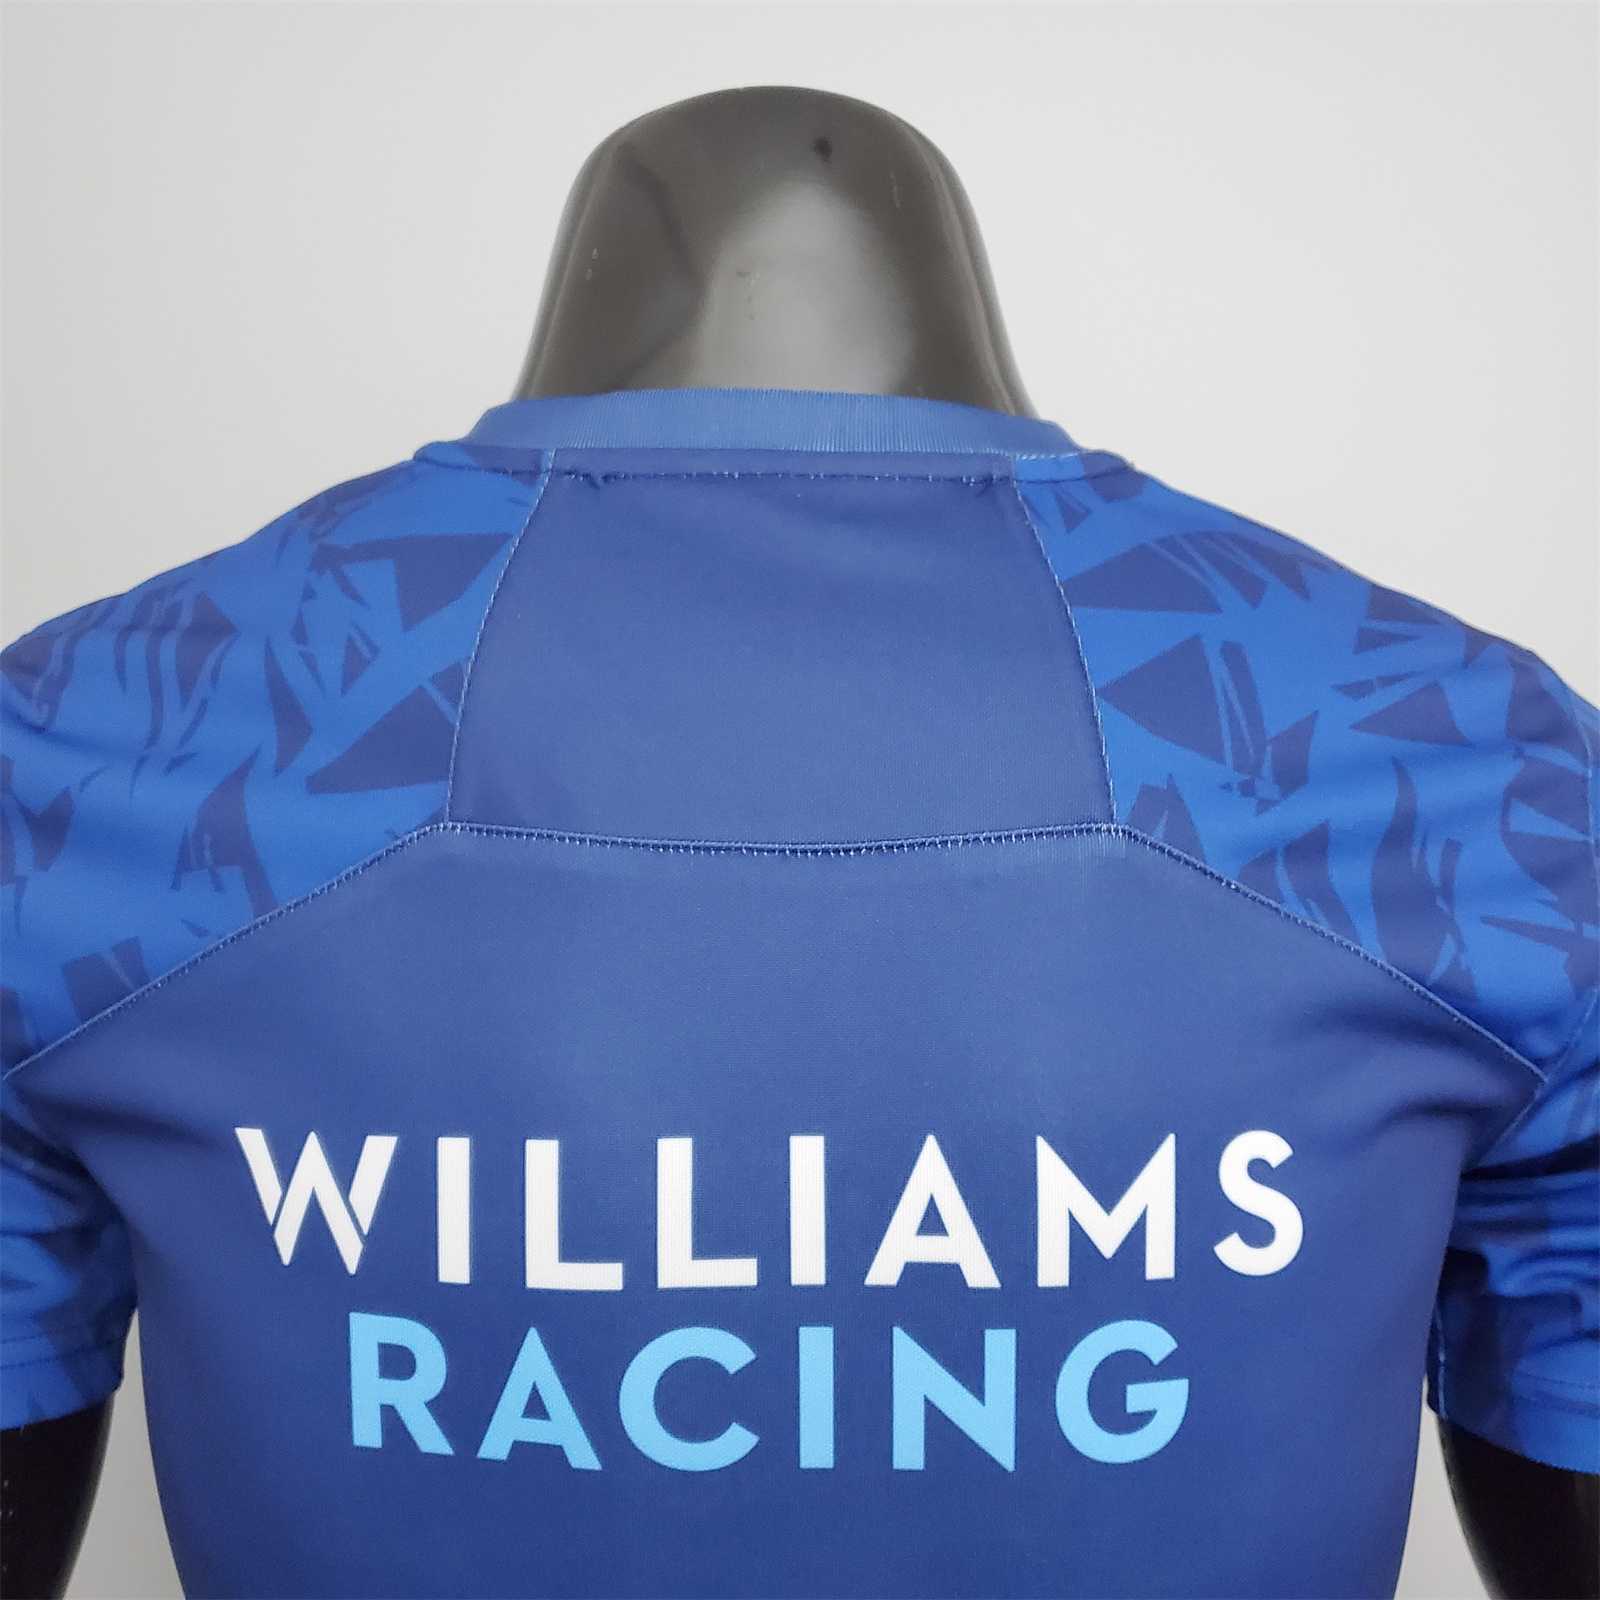 Williams F1 Racing Team Training Jersey - Navy 2021